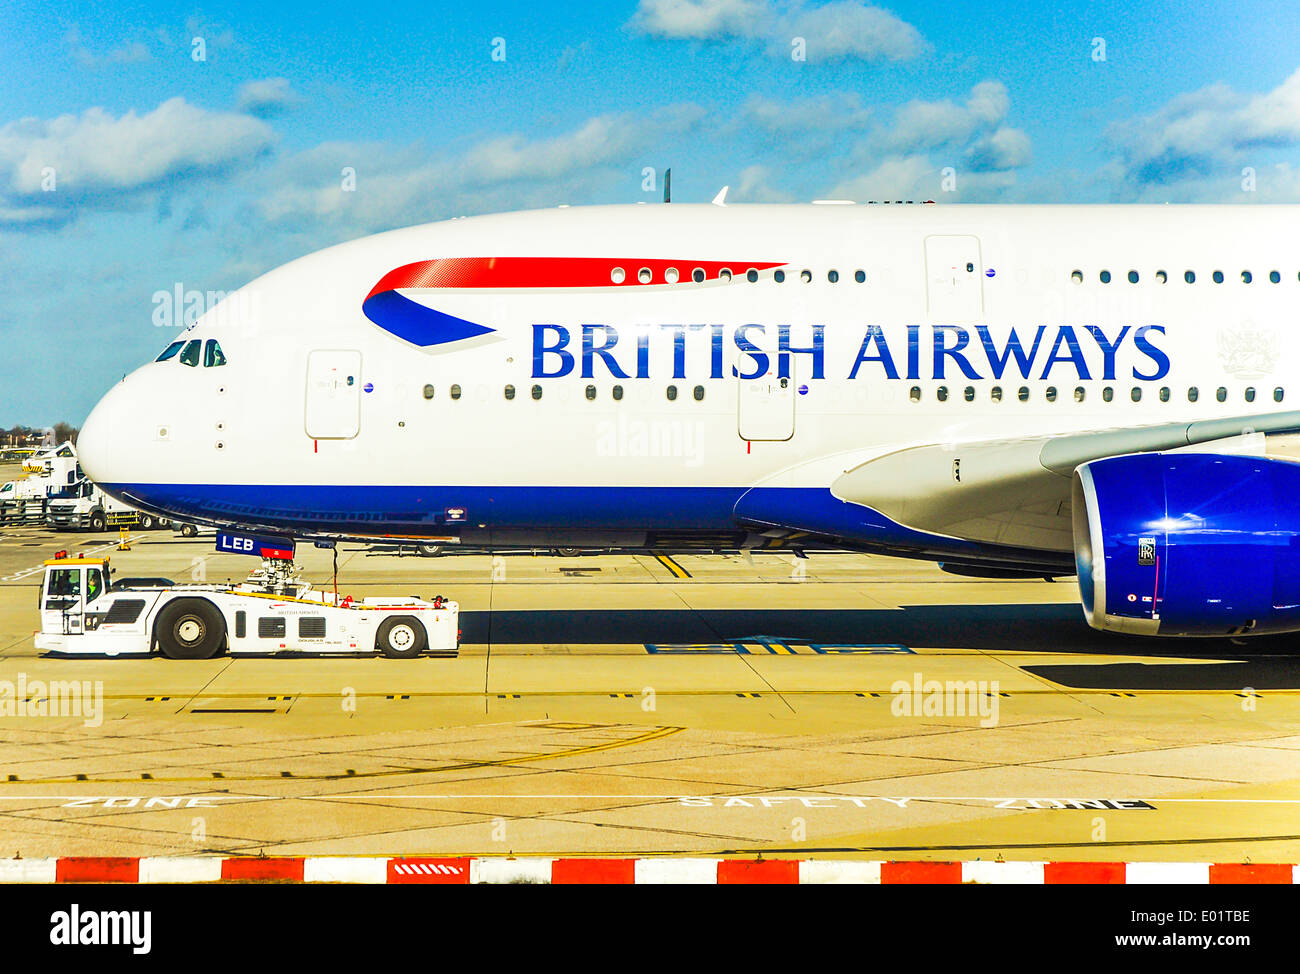 A British Airways aircraft at Heathrow airport, UK. Stock Photo